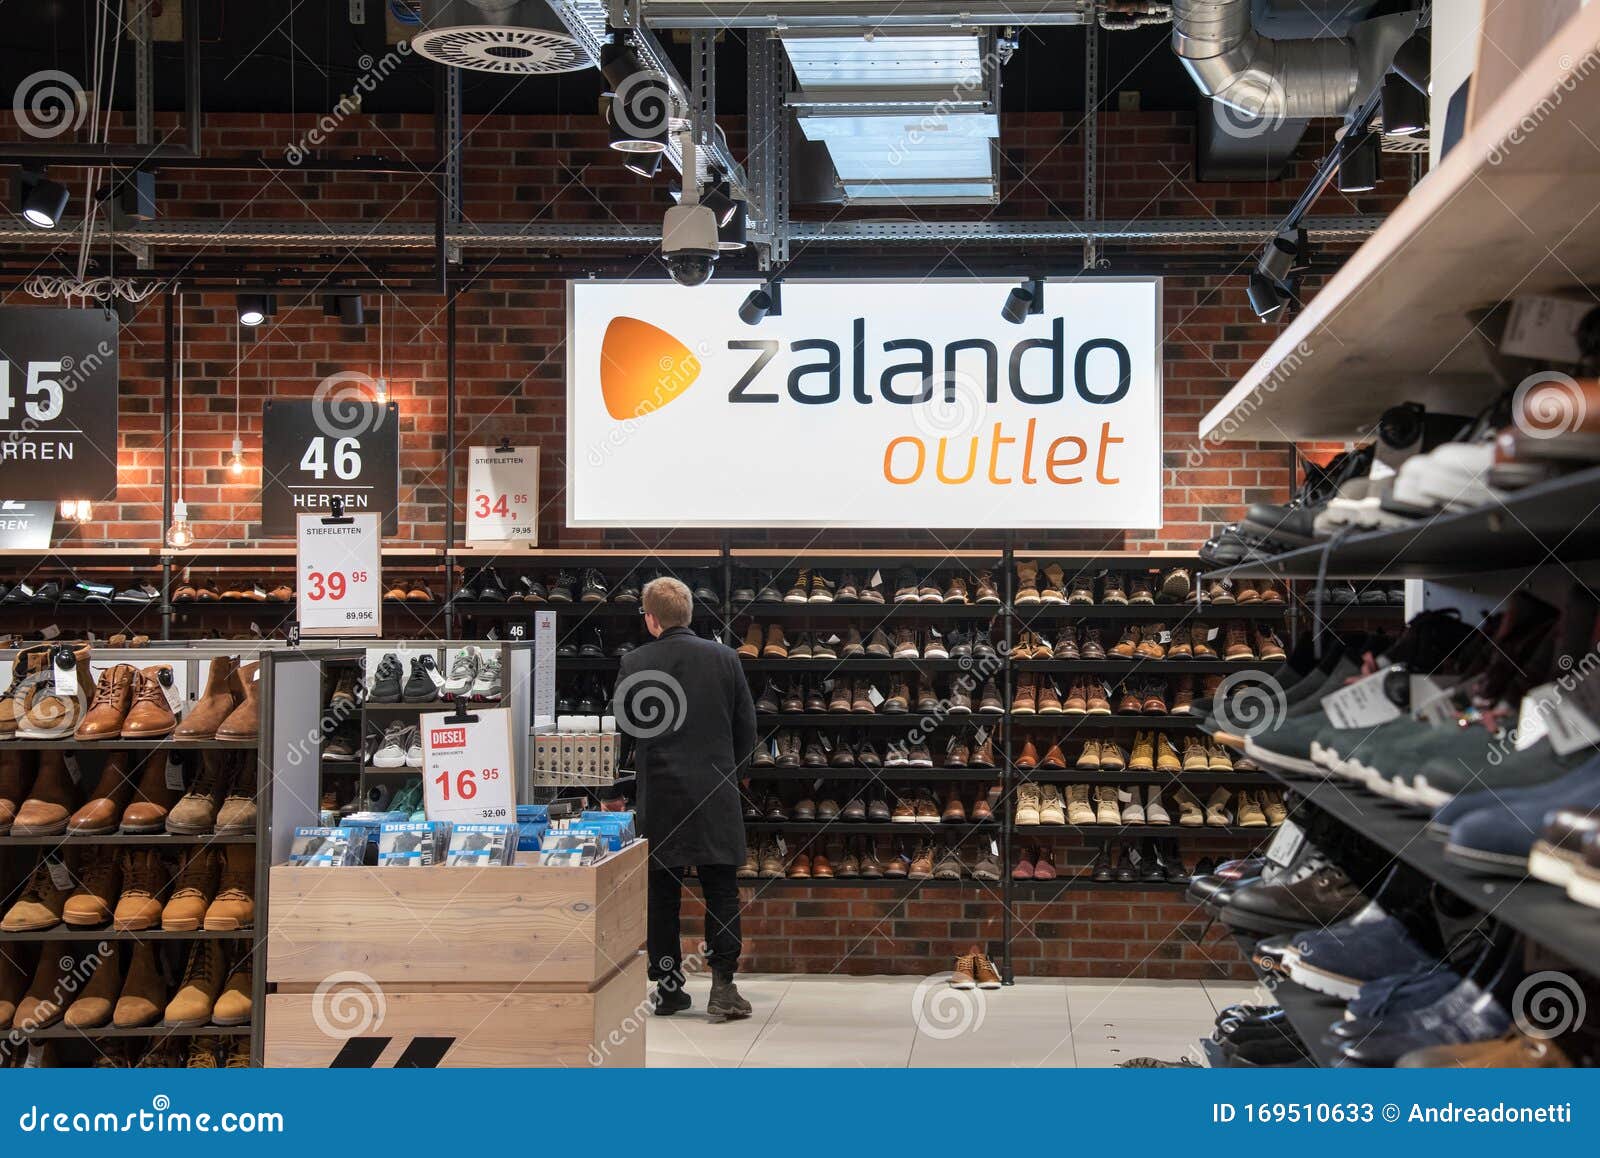 Zalando Outlet Stock Photos - Free & Royalty-Free Stock Photos from  Dreamstime